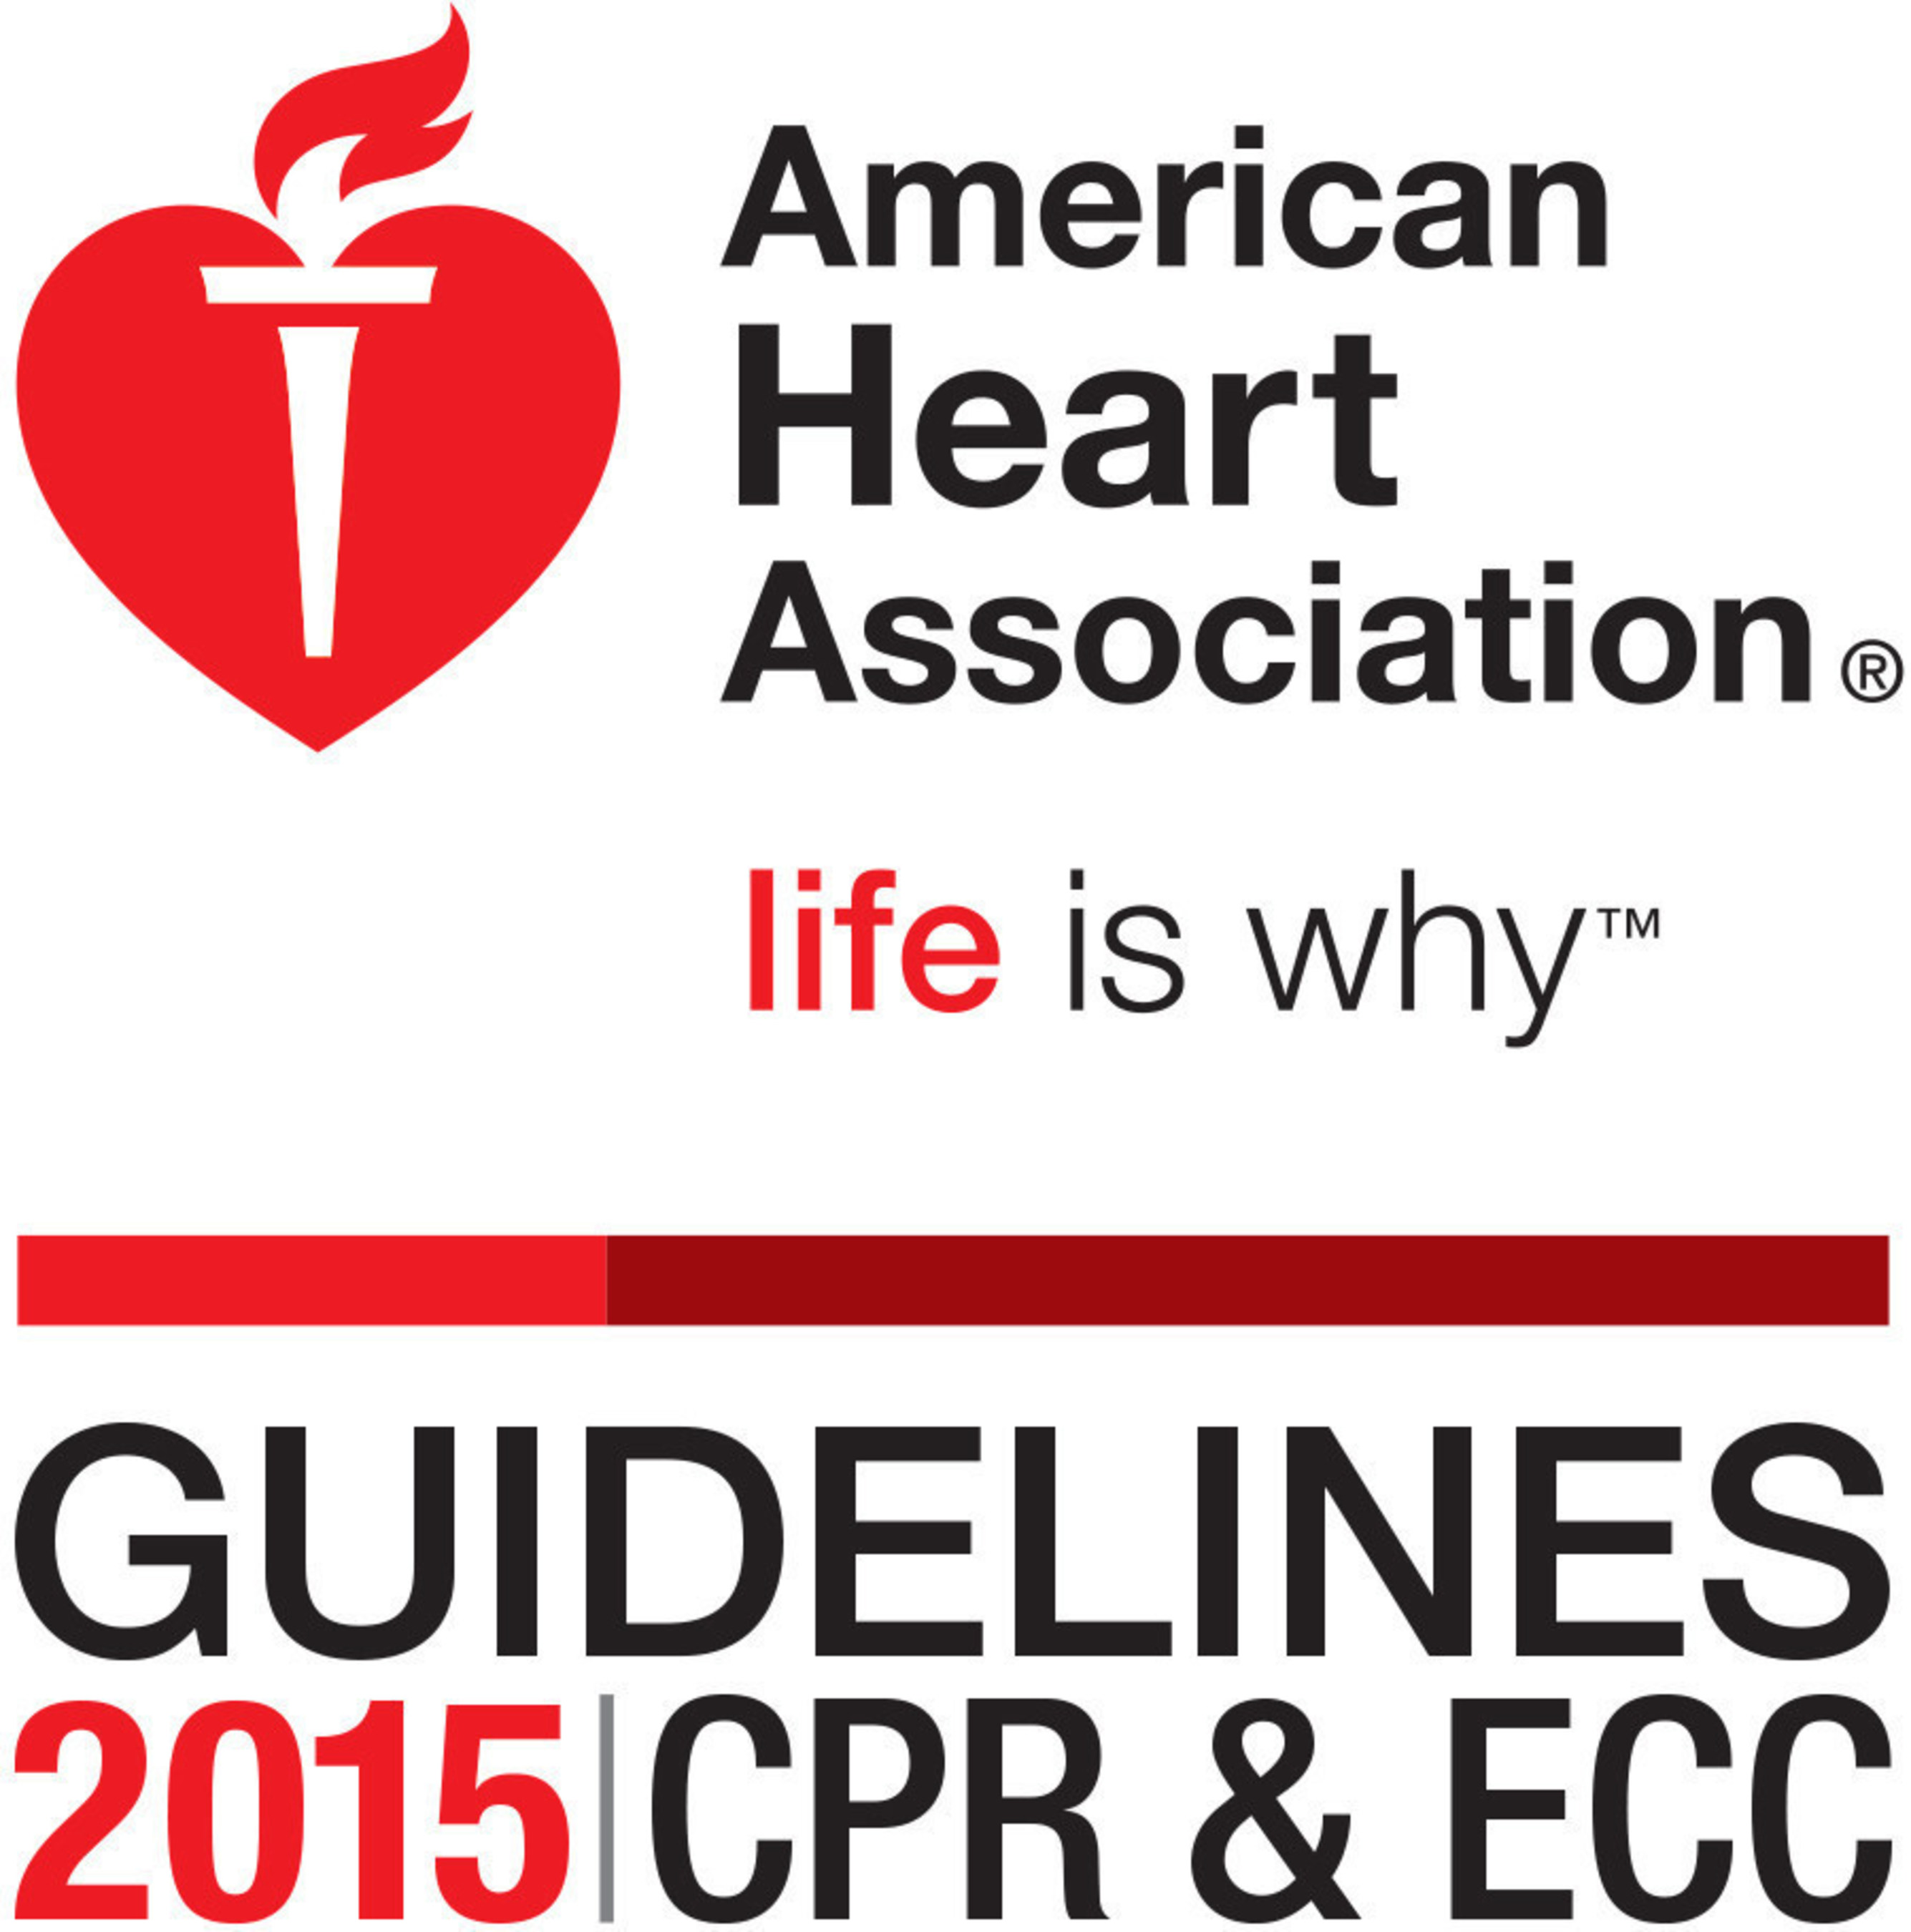 American Heart Association CPR & ECC 2015 Guidelines